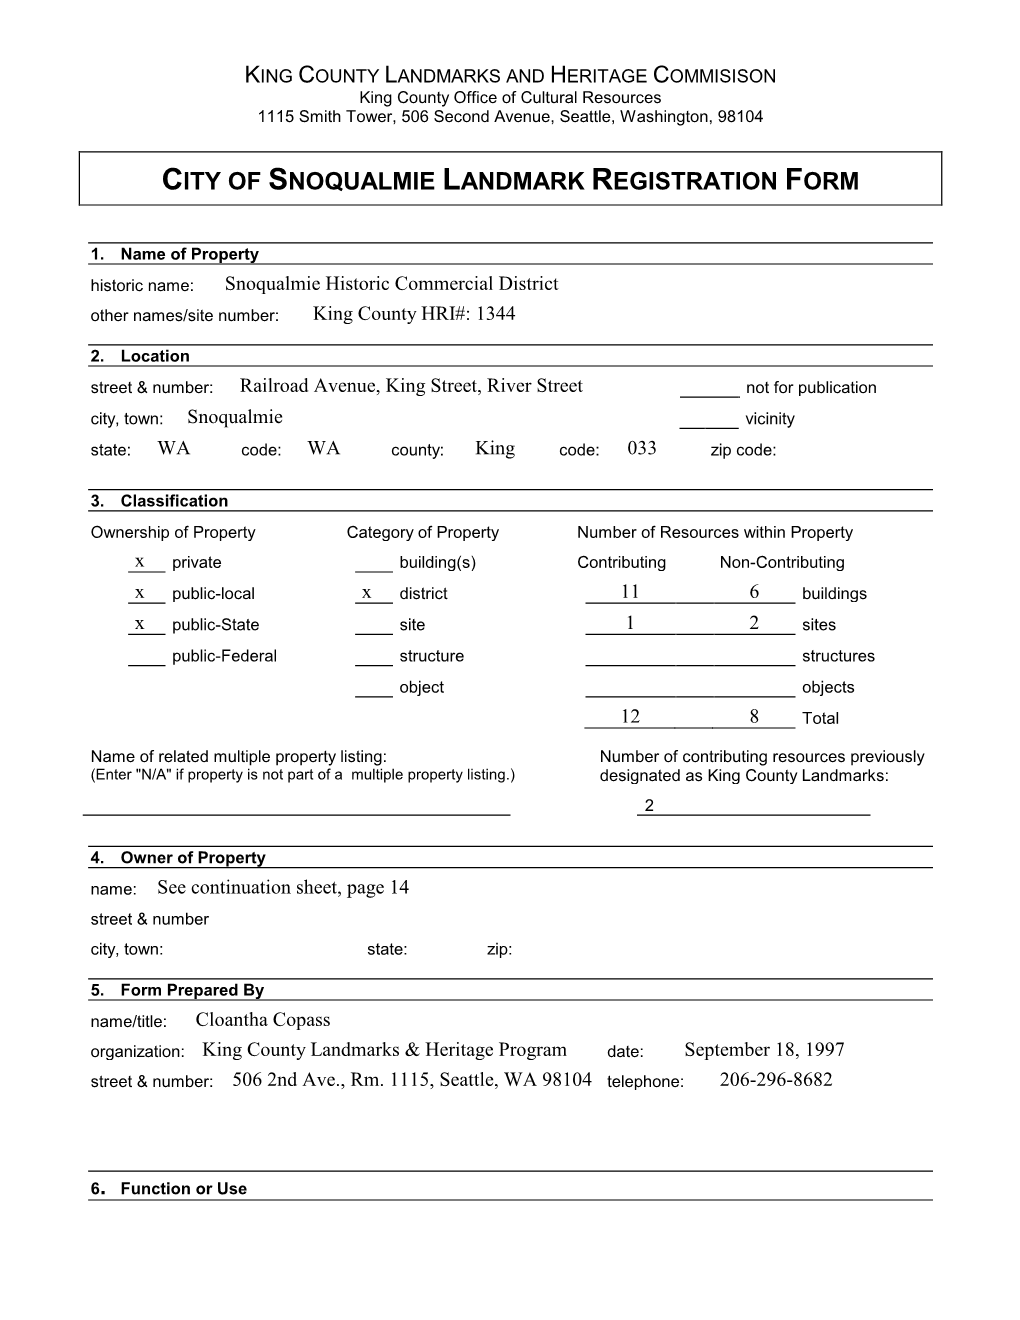 City of Snoqualmie Landmark Registration Form